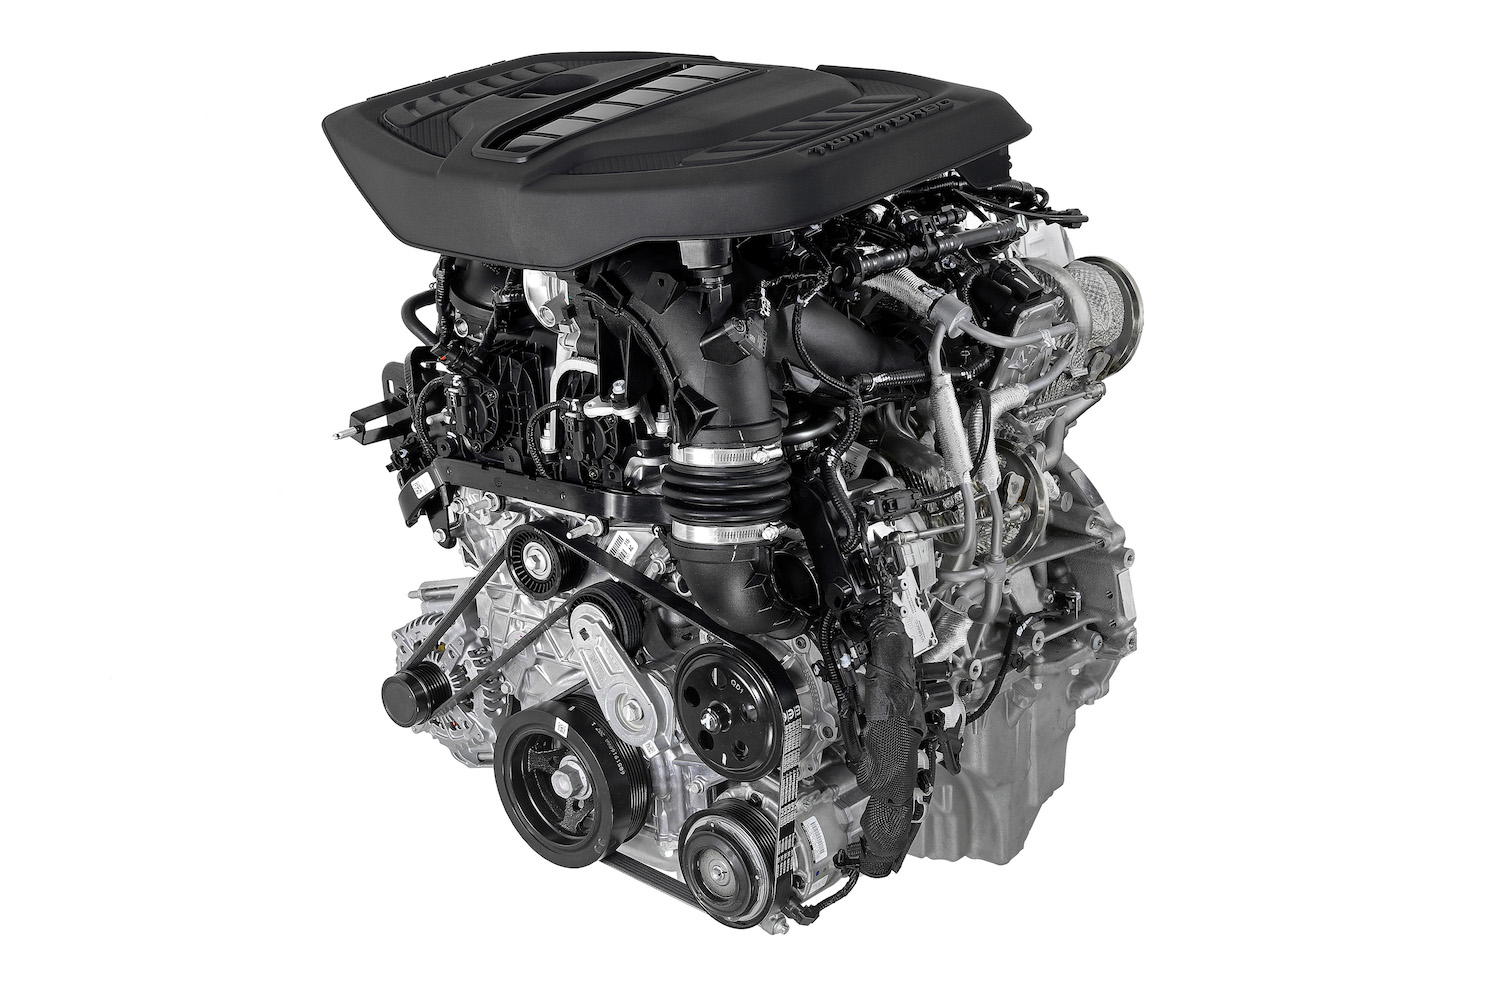 Promotional photo of Dodge's new Hurricane I6 engine on a white background.